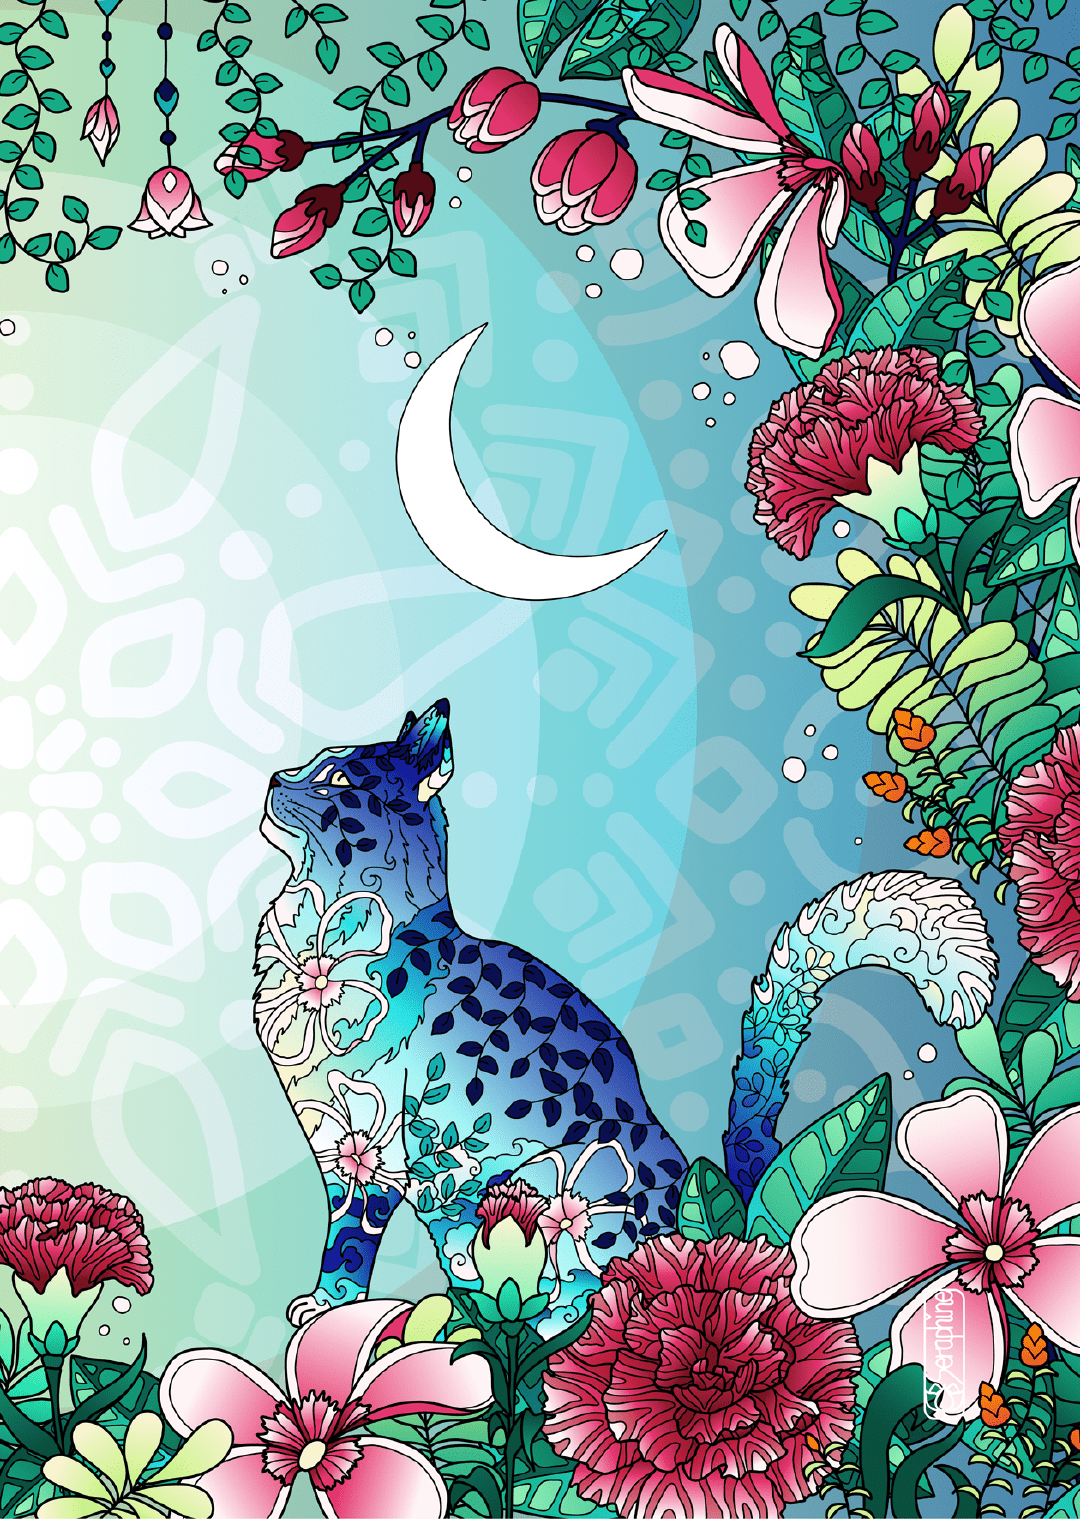 1_reflection-cat-moon-illustration.png